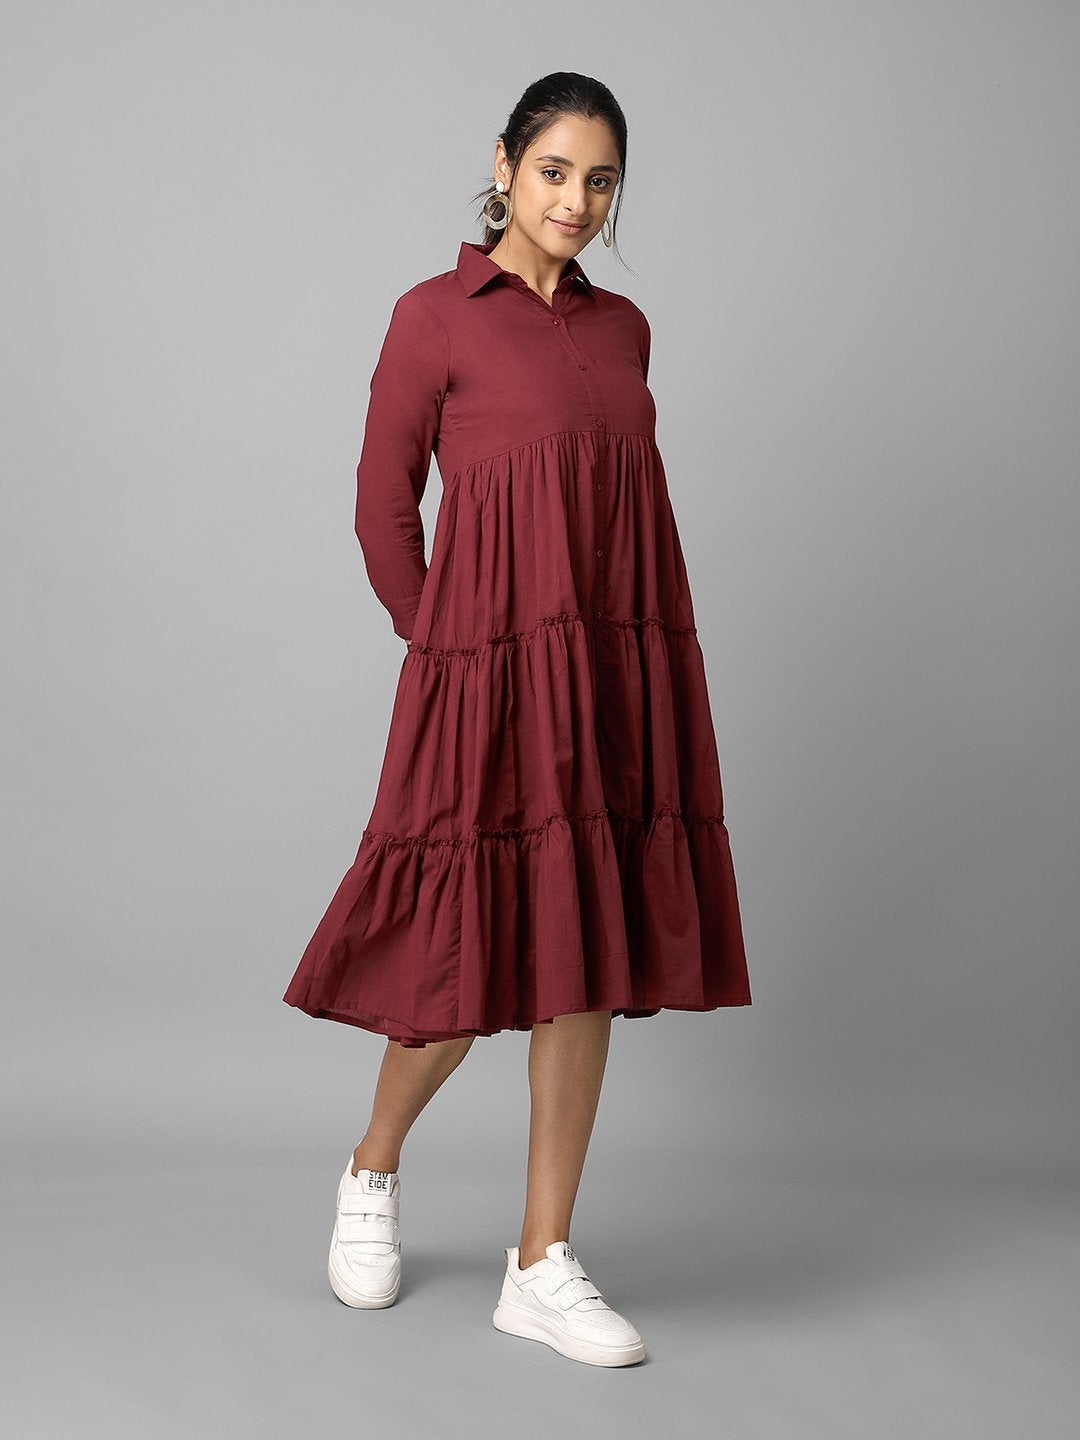 Women's Solid Wine Tiered A-Line Dress - Azira